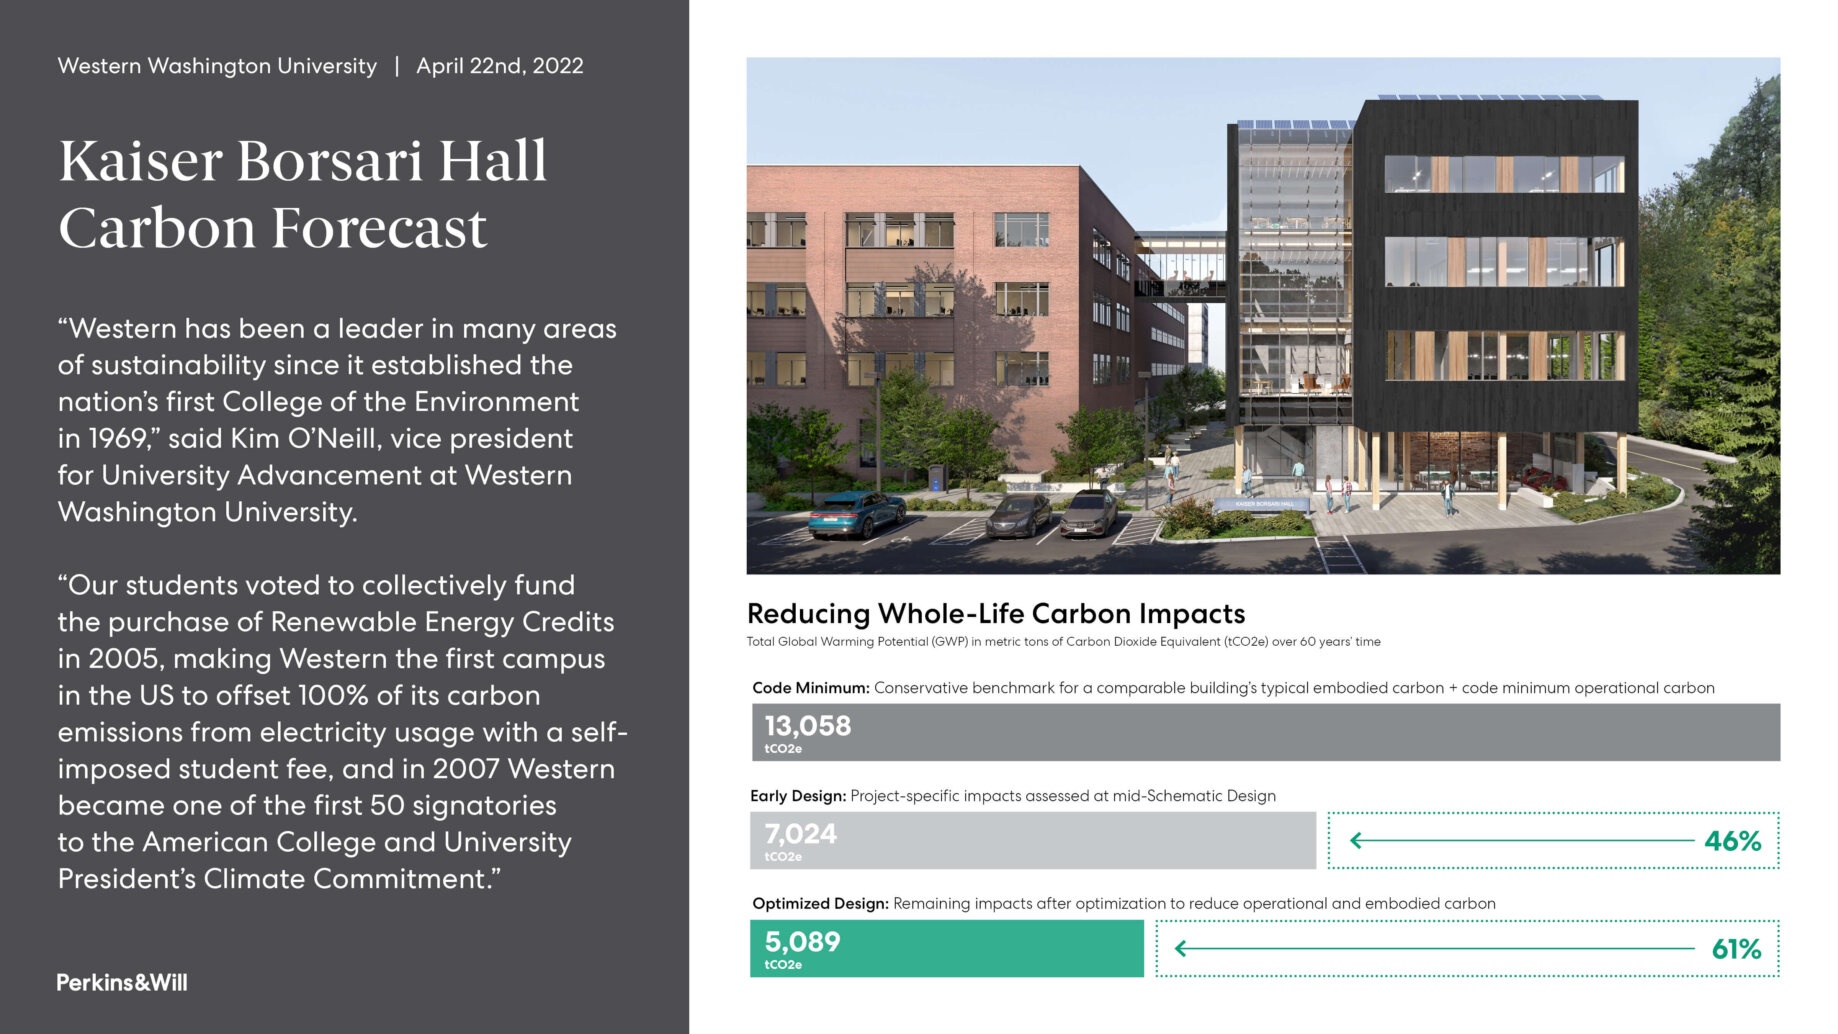 Excerpt from Carbon Forecast for Western Washington University's Kaiser Borsari Hall